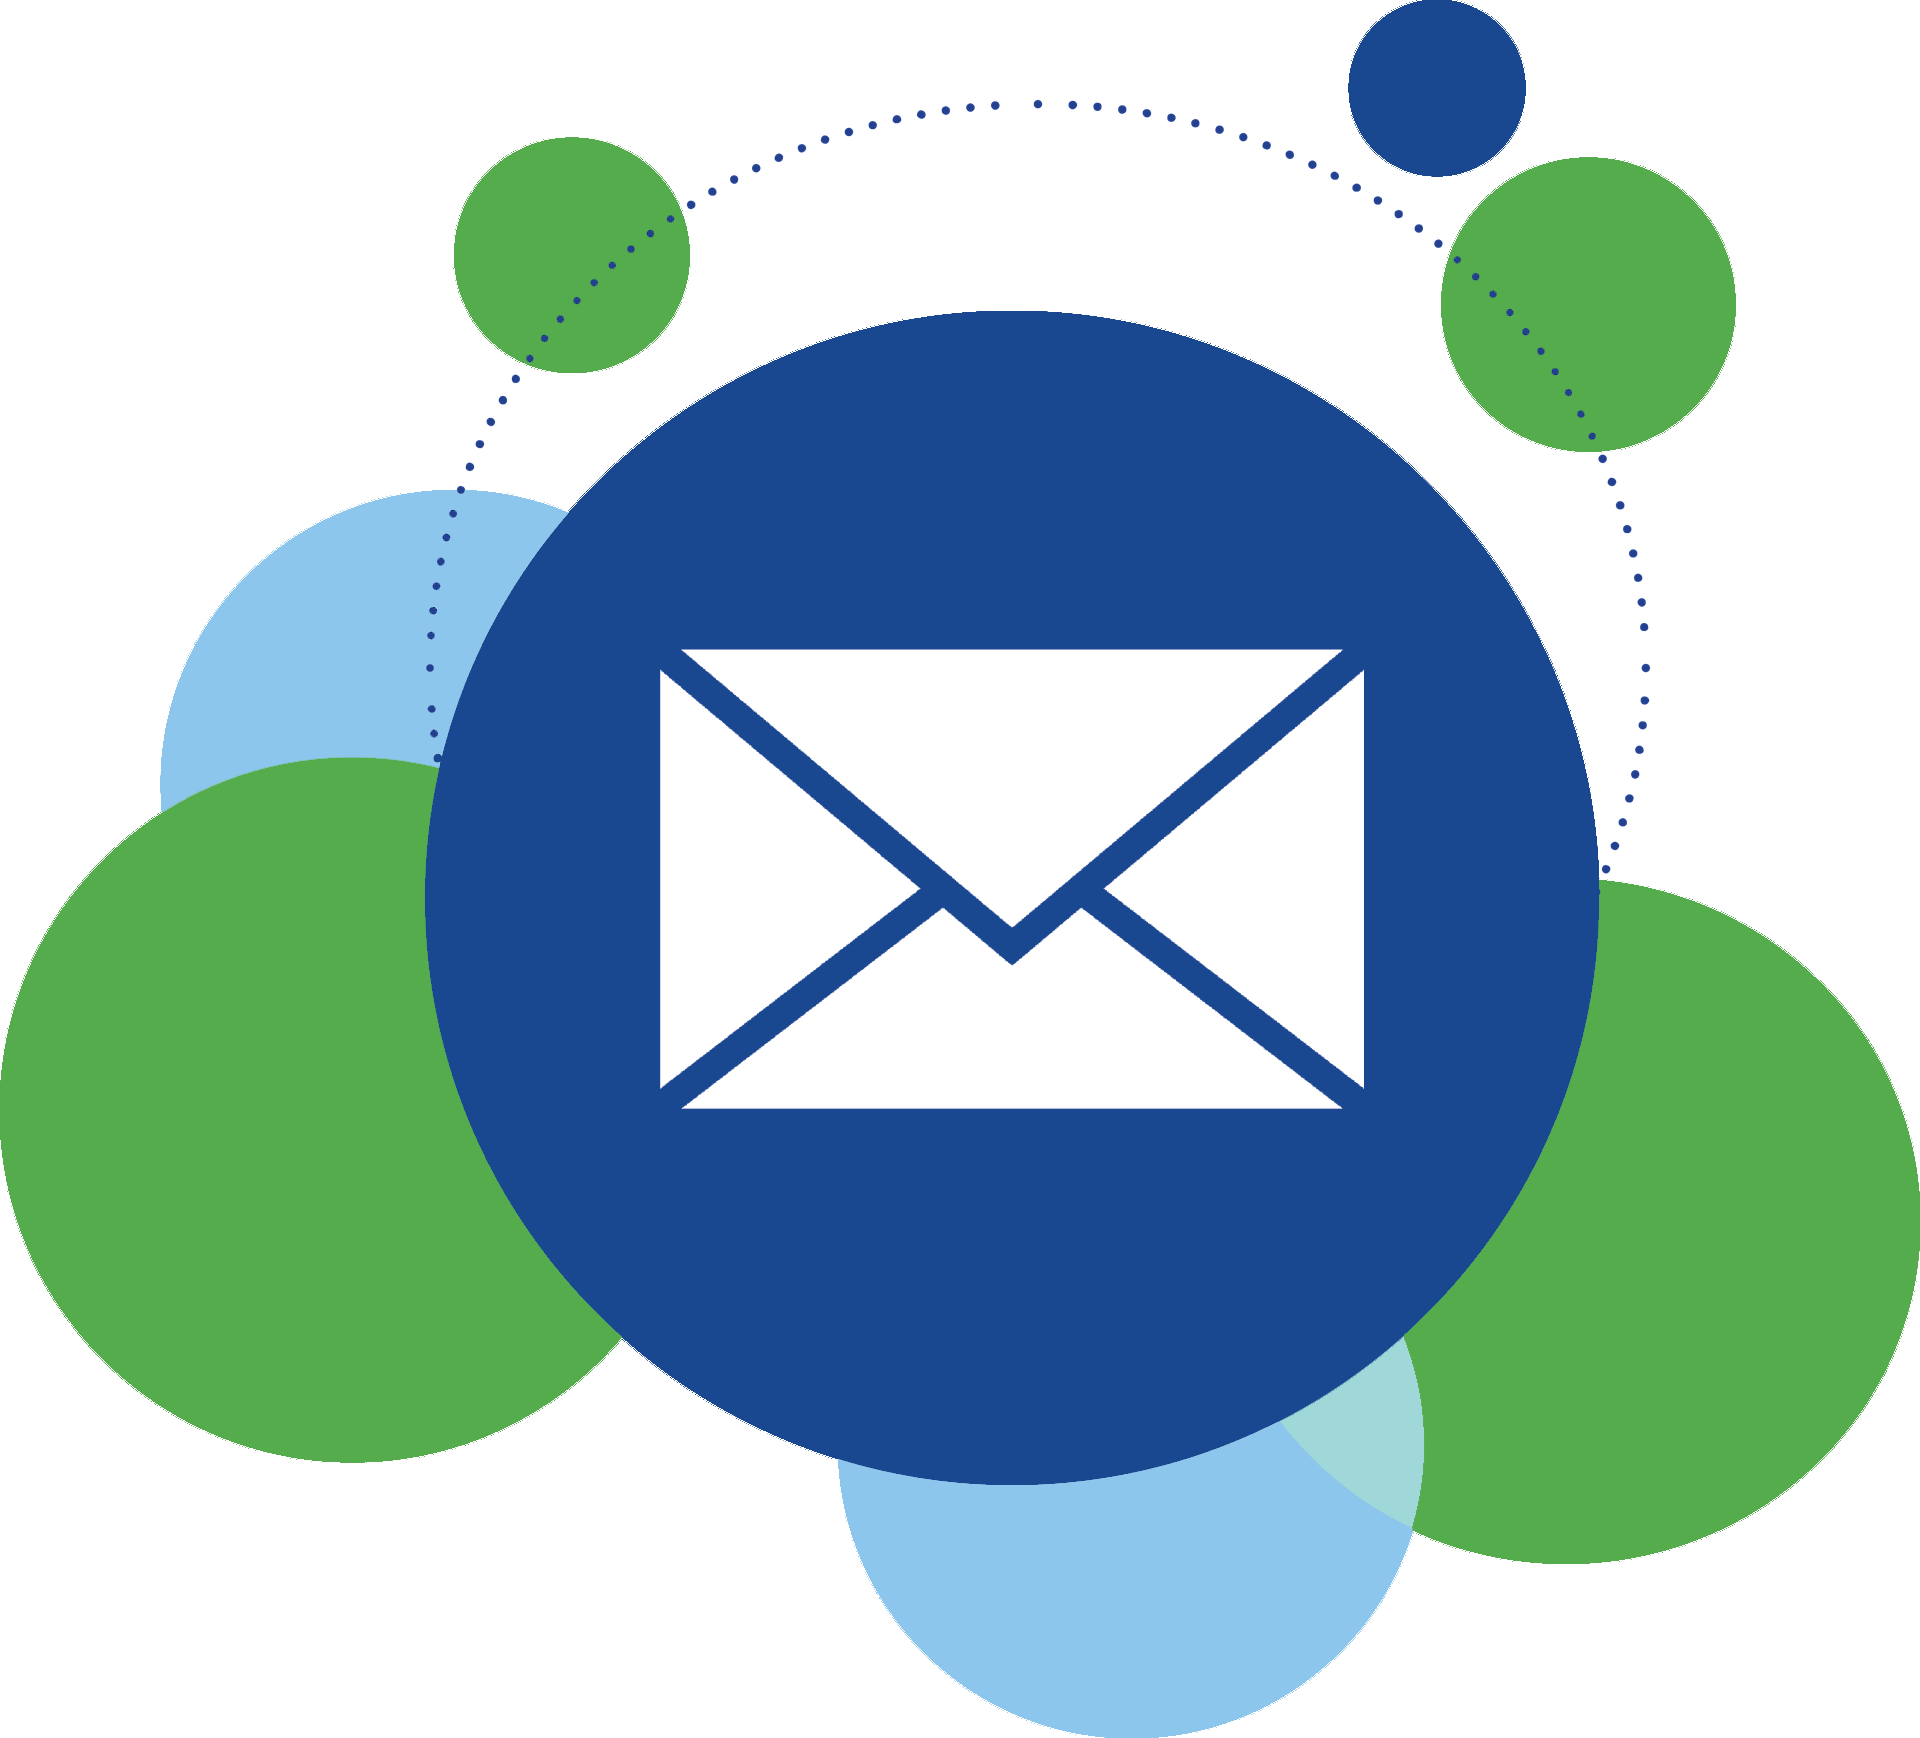 Send email. Электронная почта. Mail на прозрачном фоне. Email. Значок почты для связи.